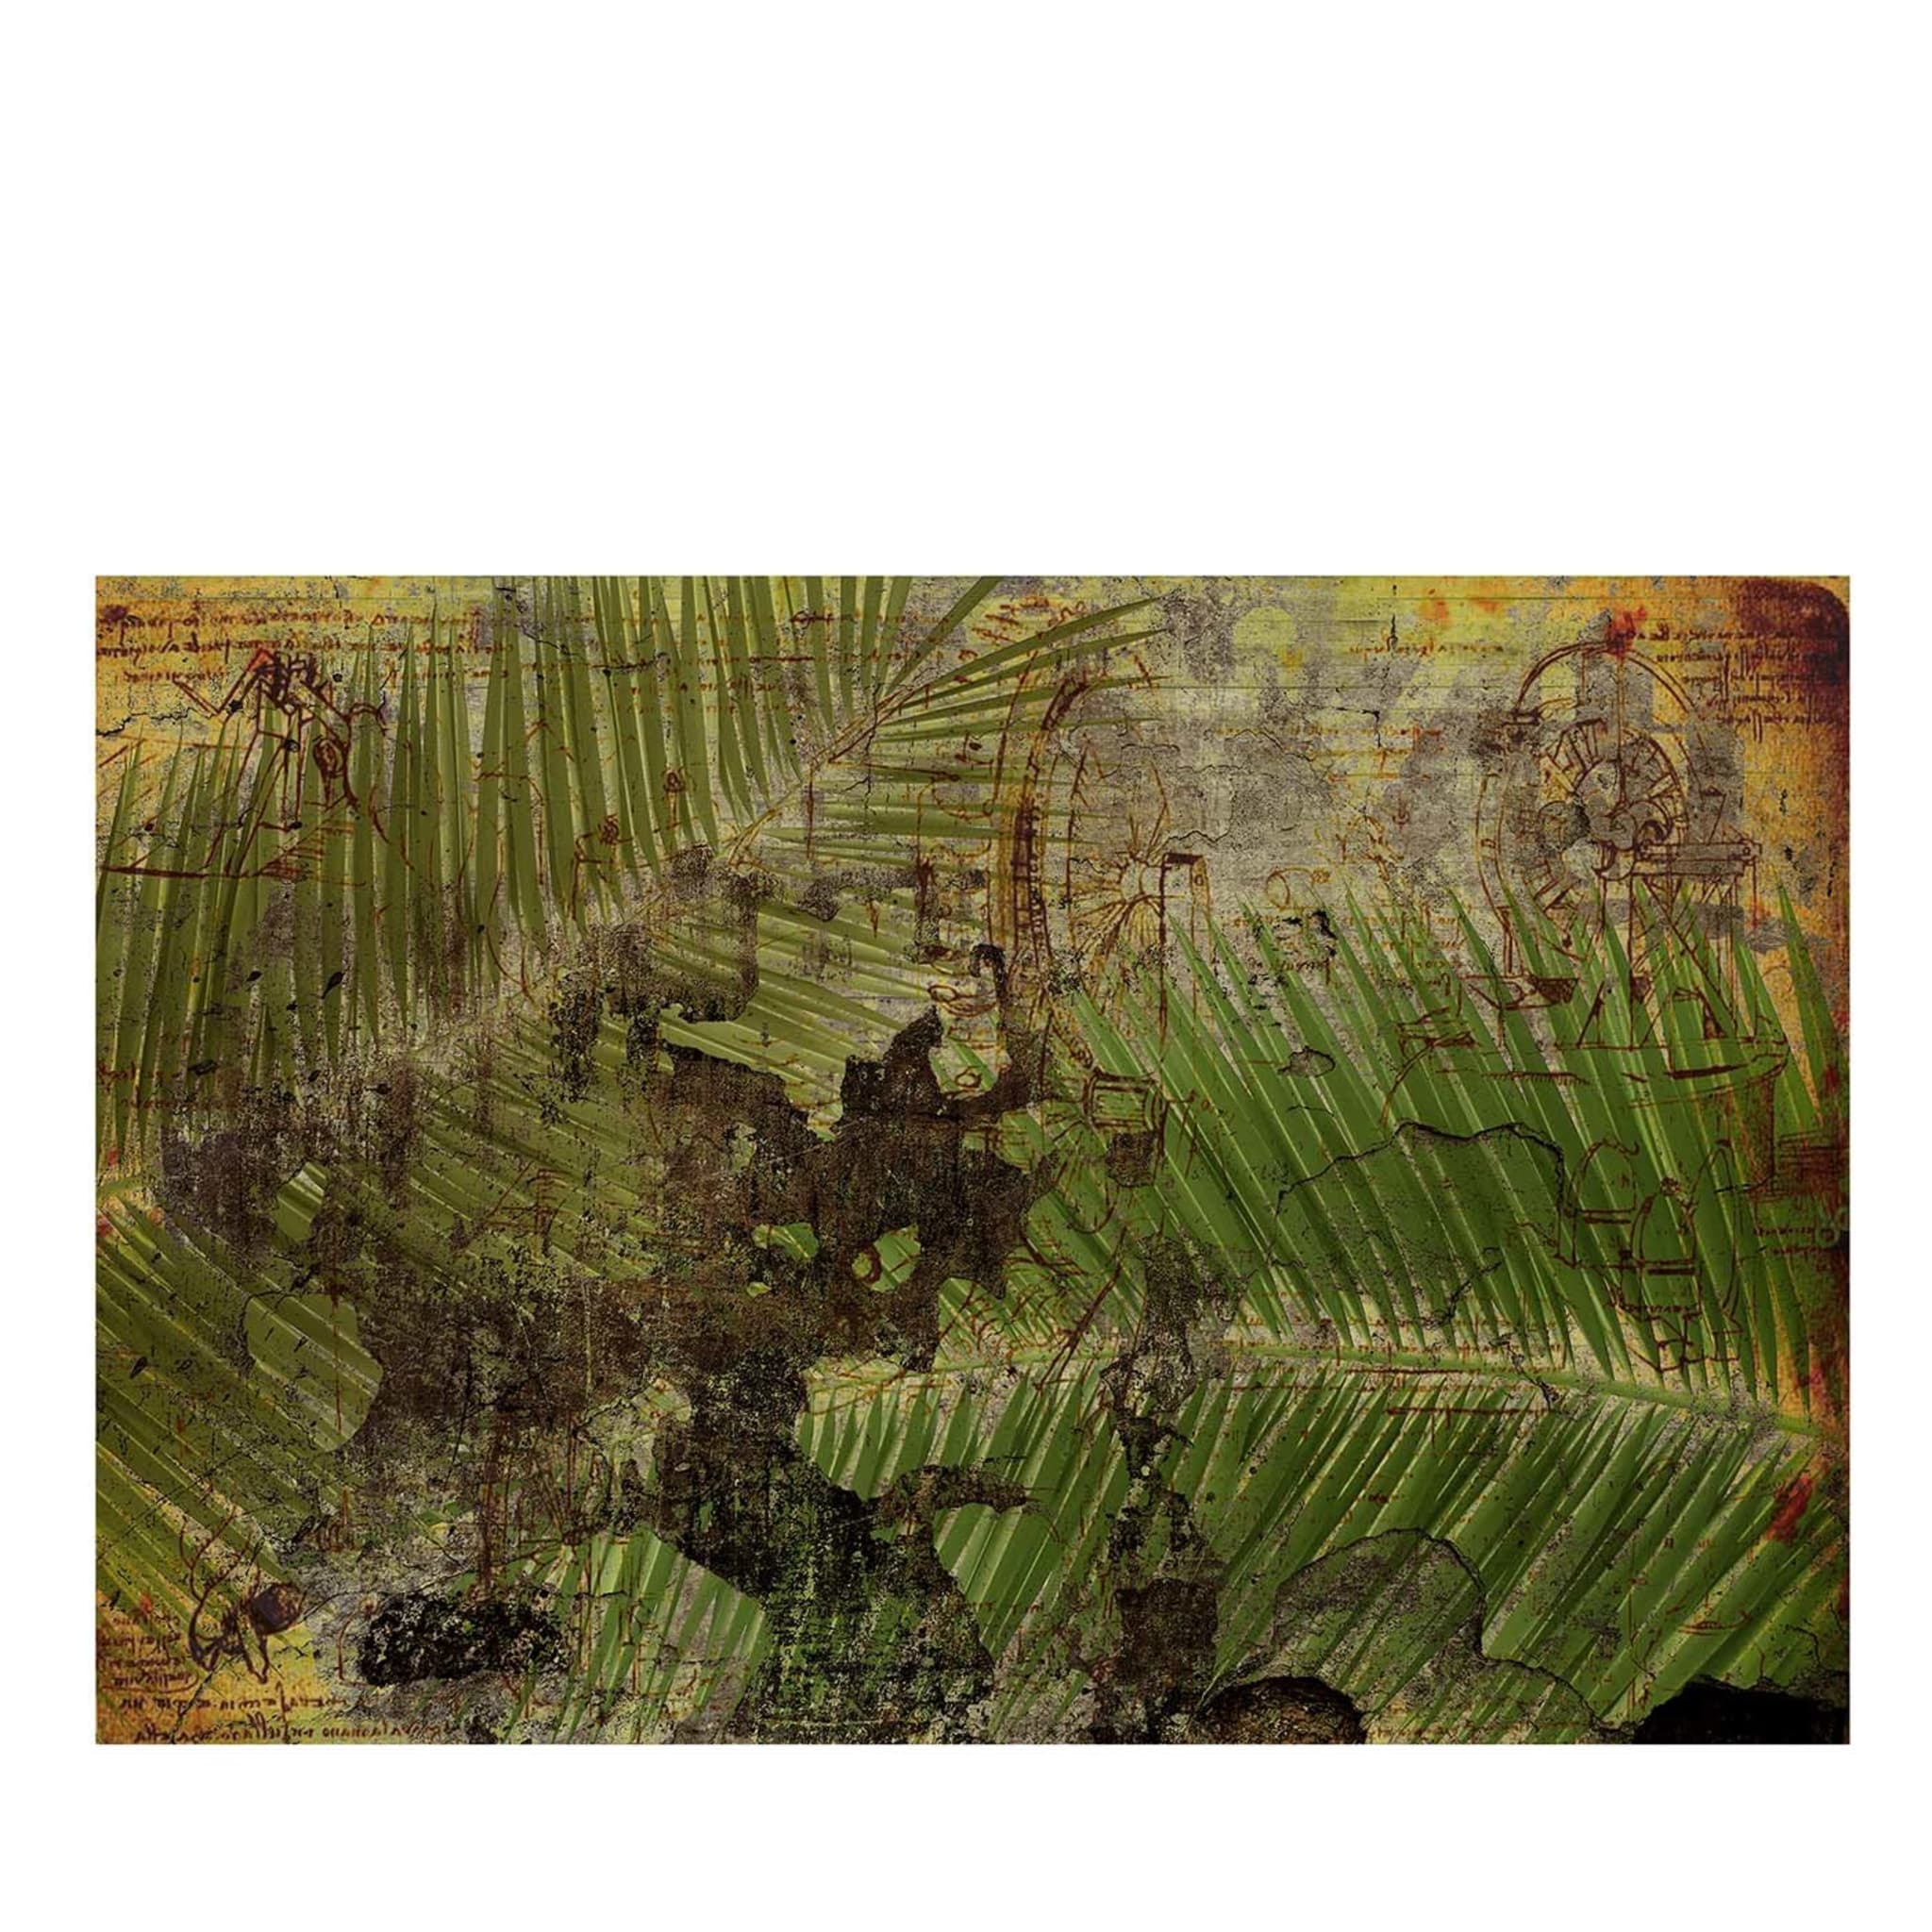 Foglie Di Palma Wallpaper #1 - Main view